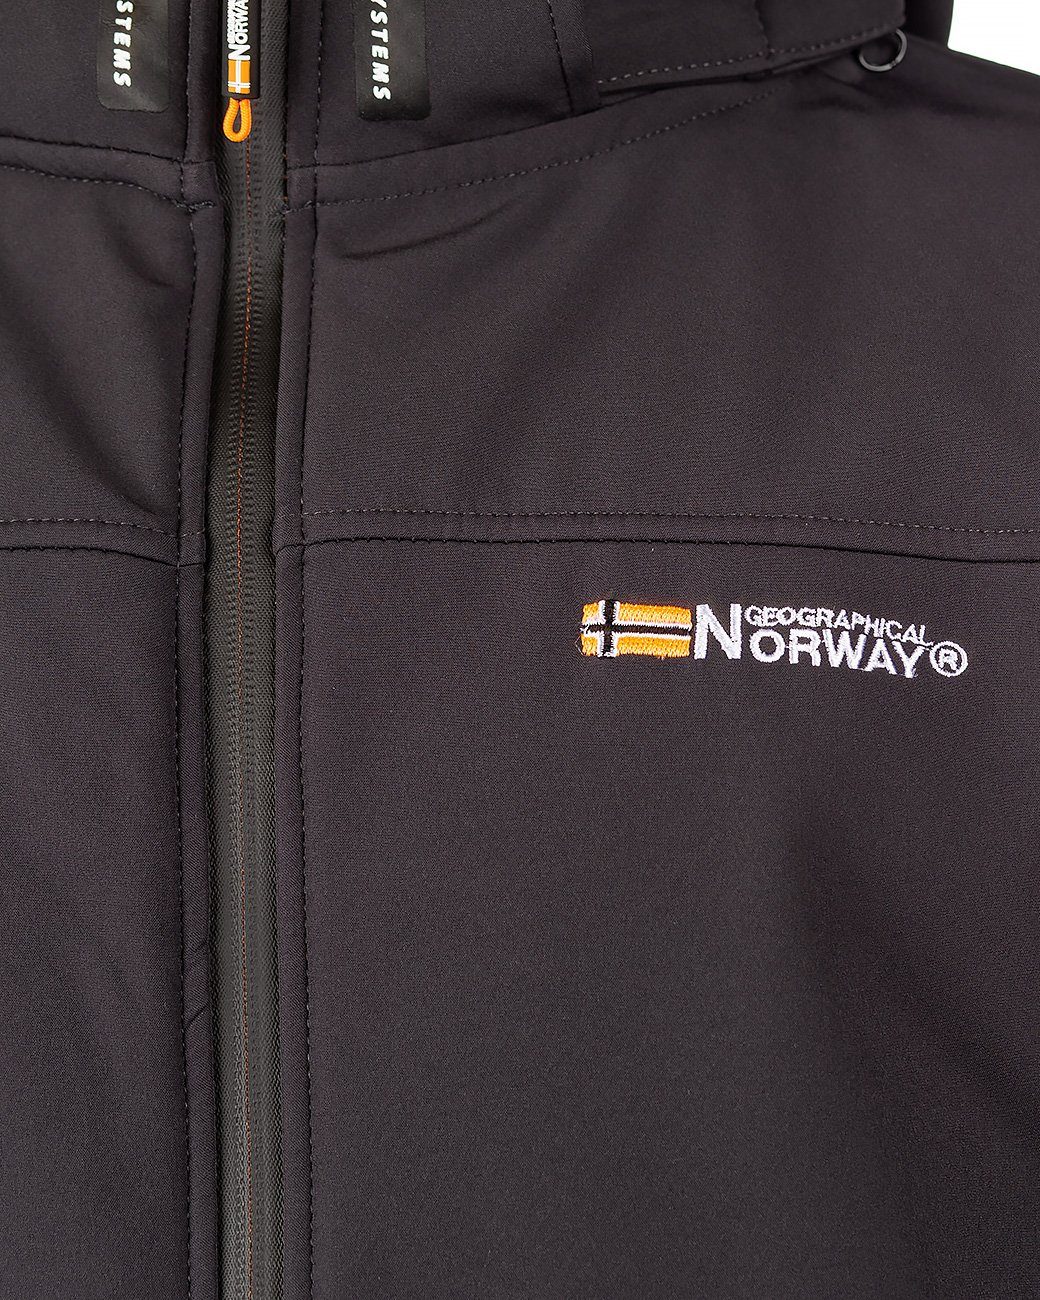 Softshelljacke Outdoor (1-St) Casual Men batakeaway Jacke dunkelgrau Kapuze Geographical mit Norway